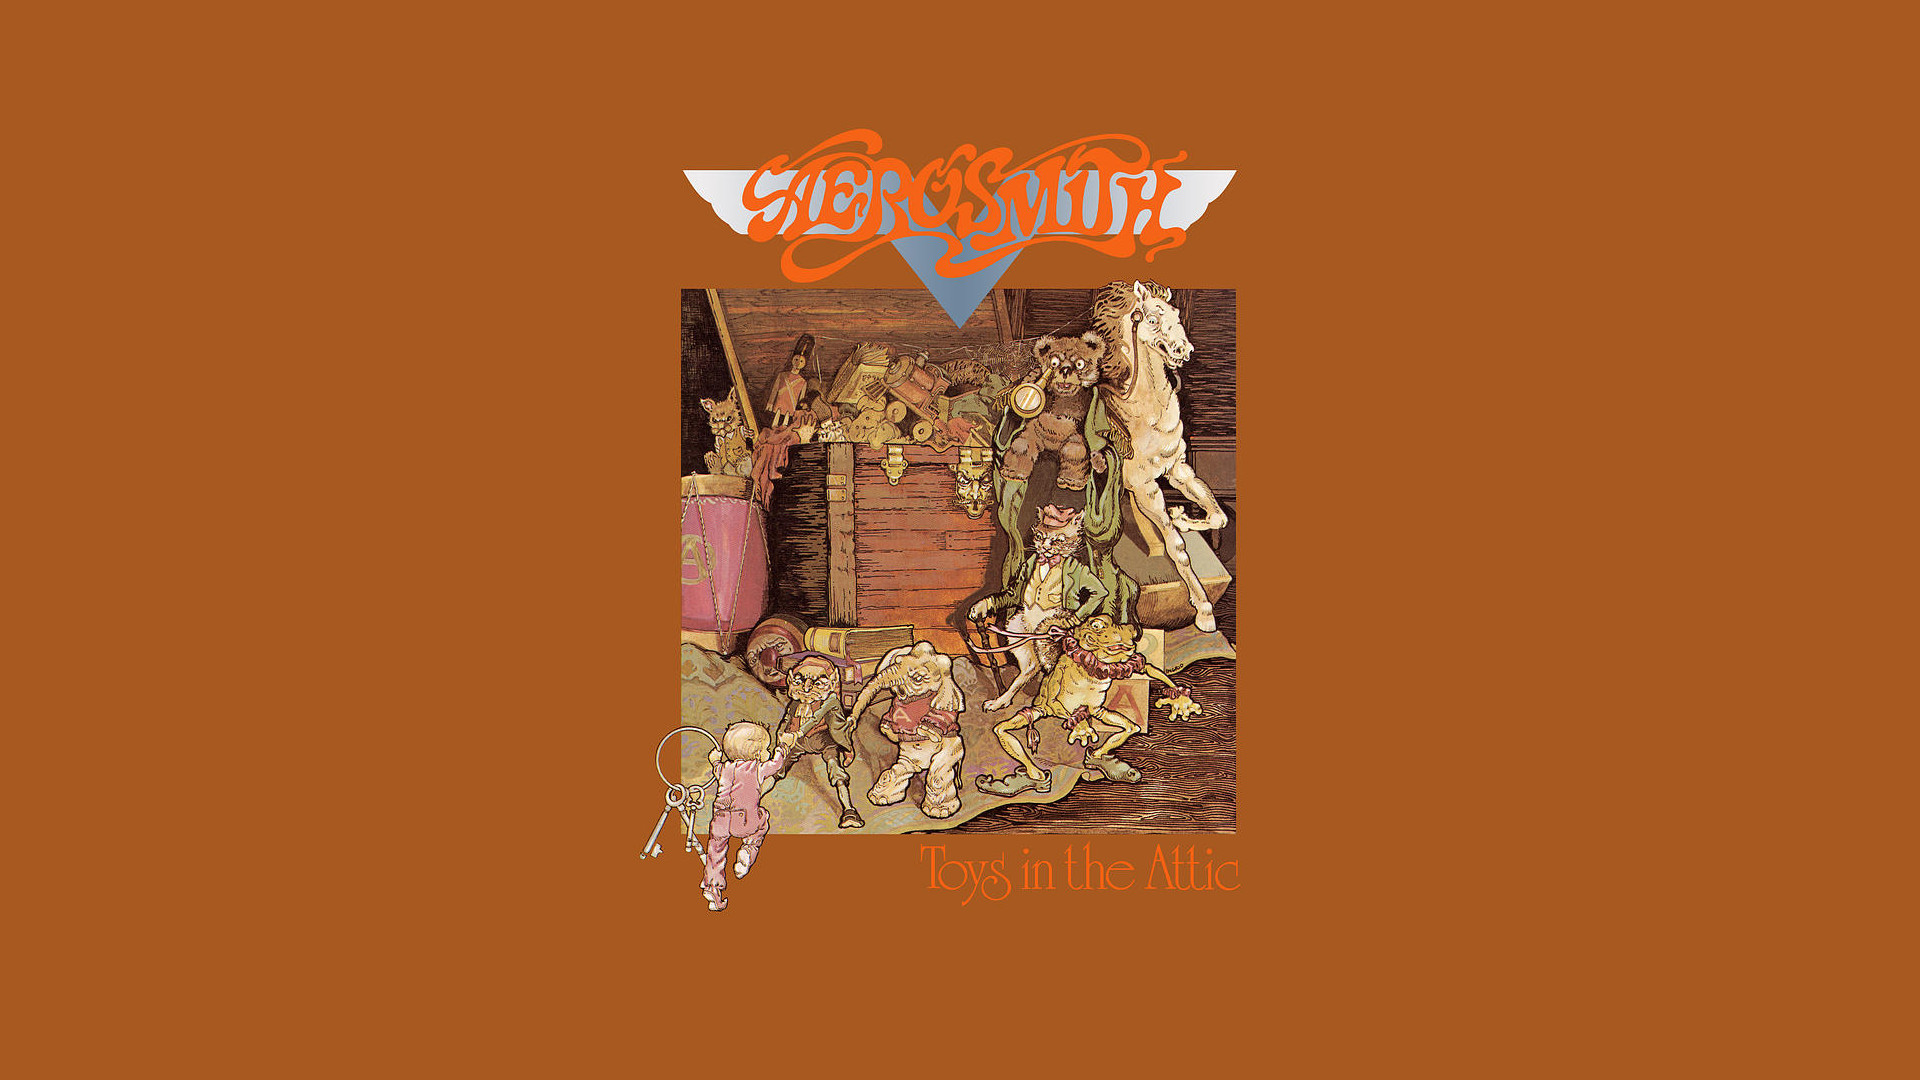 Classic Rock Album Wallpapers 
 Data-src - Aerosmith Toys In The Attic Album Cover - HD Wallpaper 